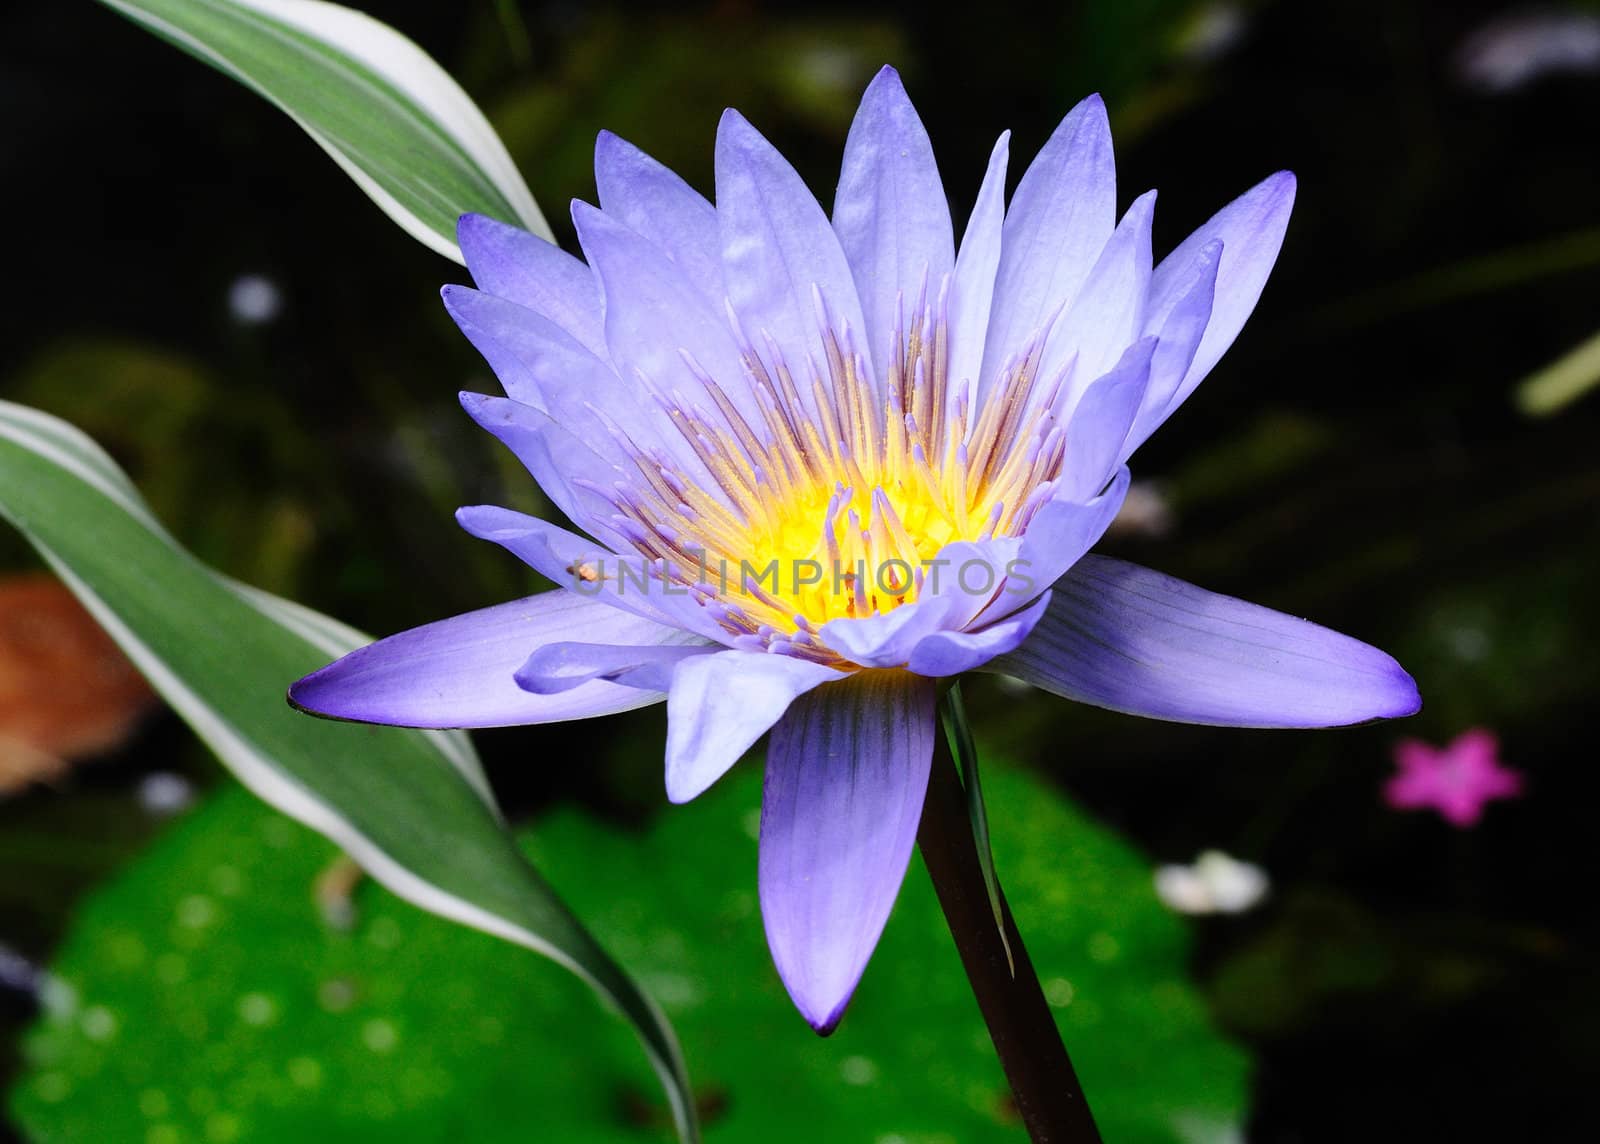 Striking macro image of a beautiful violet color sun lotus